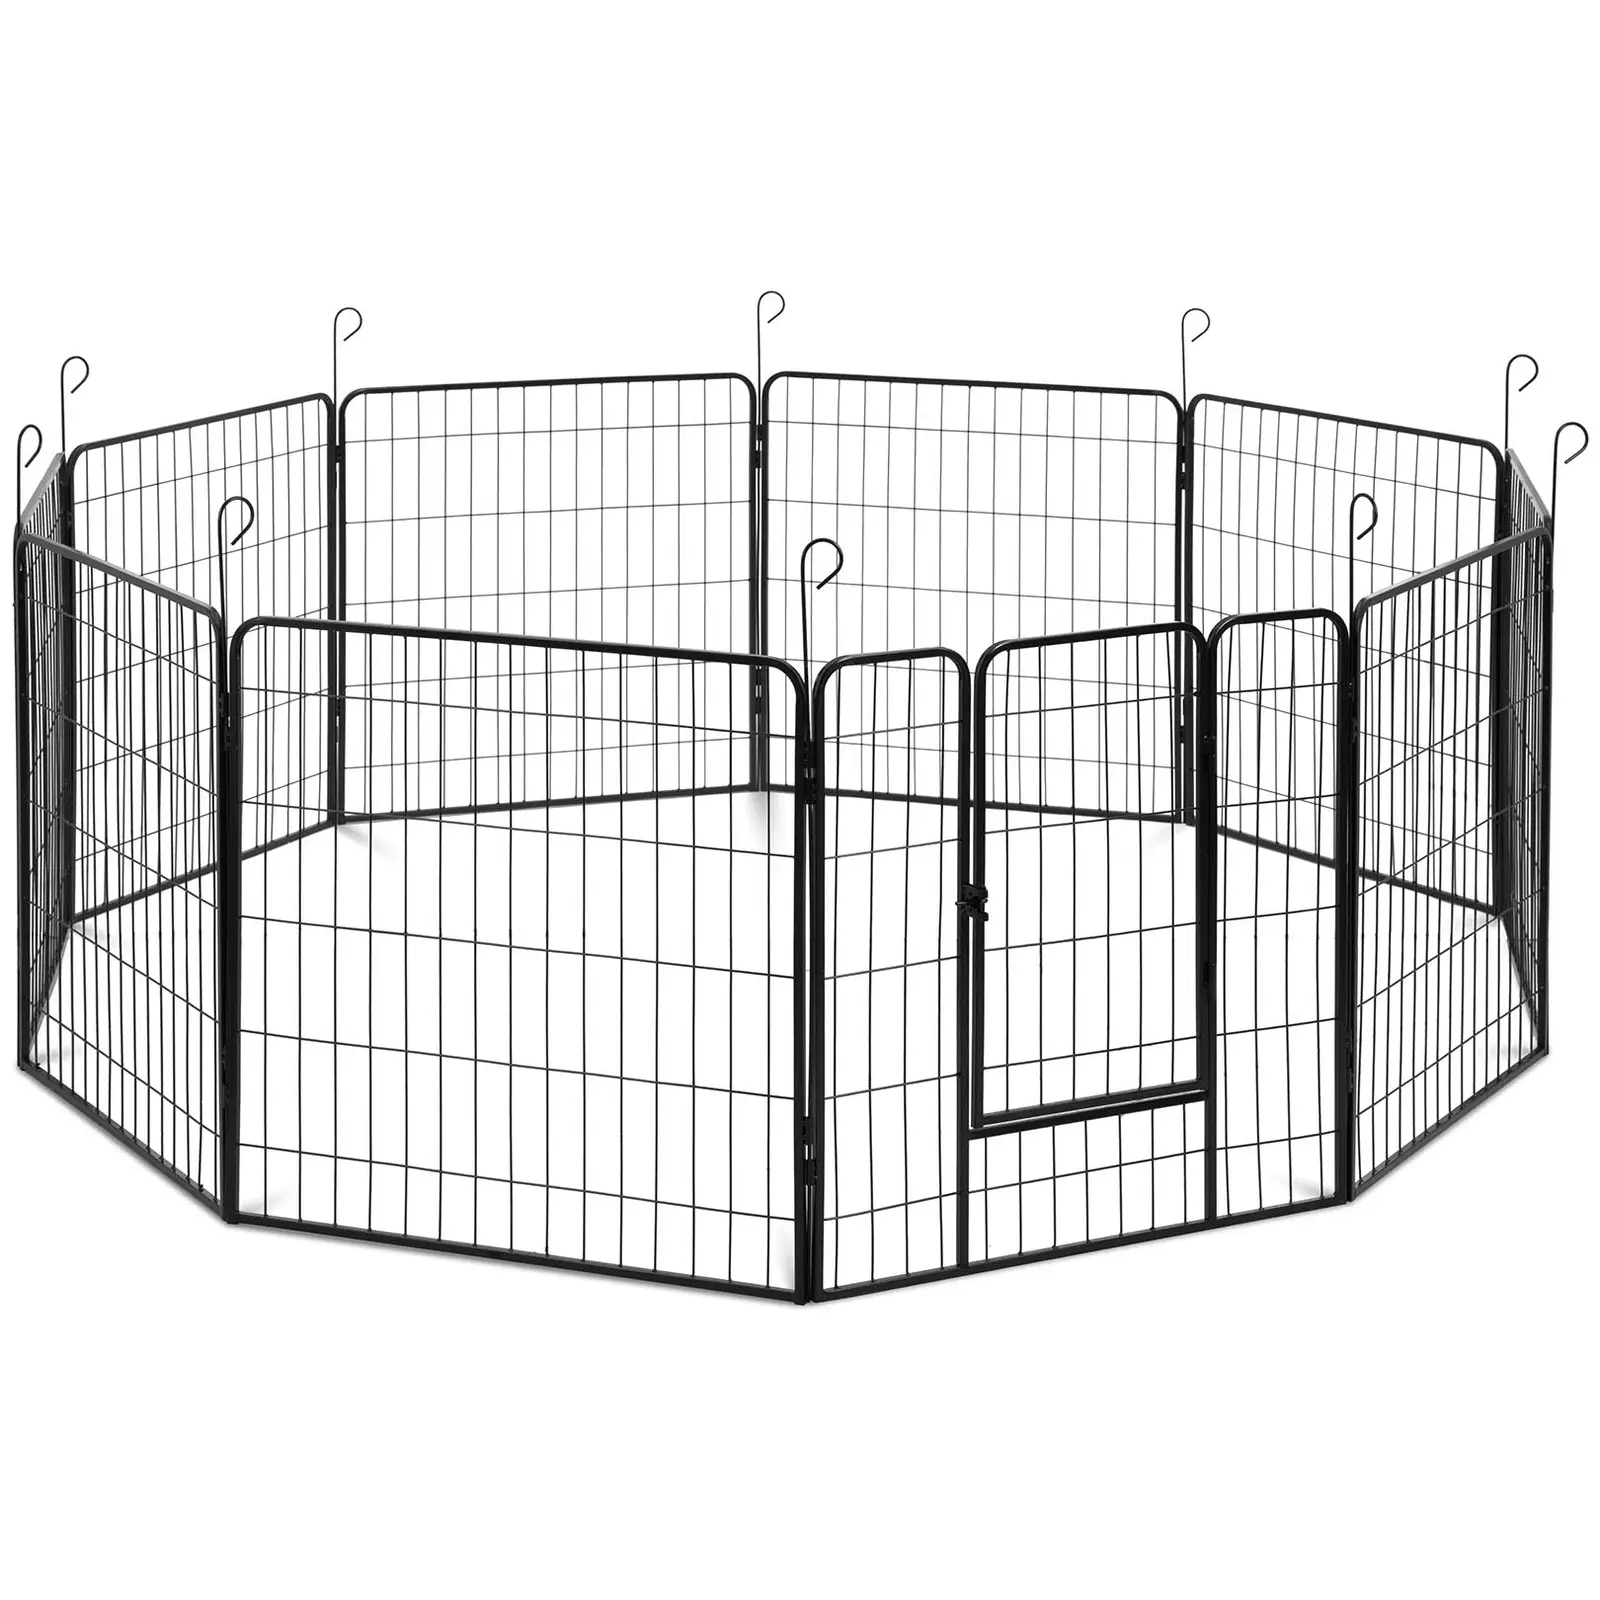 Puppy run - s vratima - 10 modularni segmenti - za zatvorene i otvorene prostore